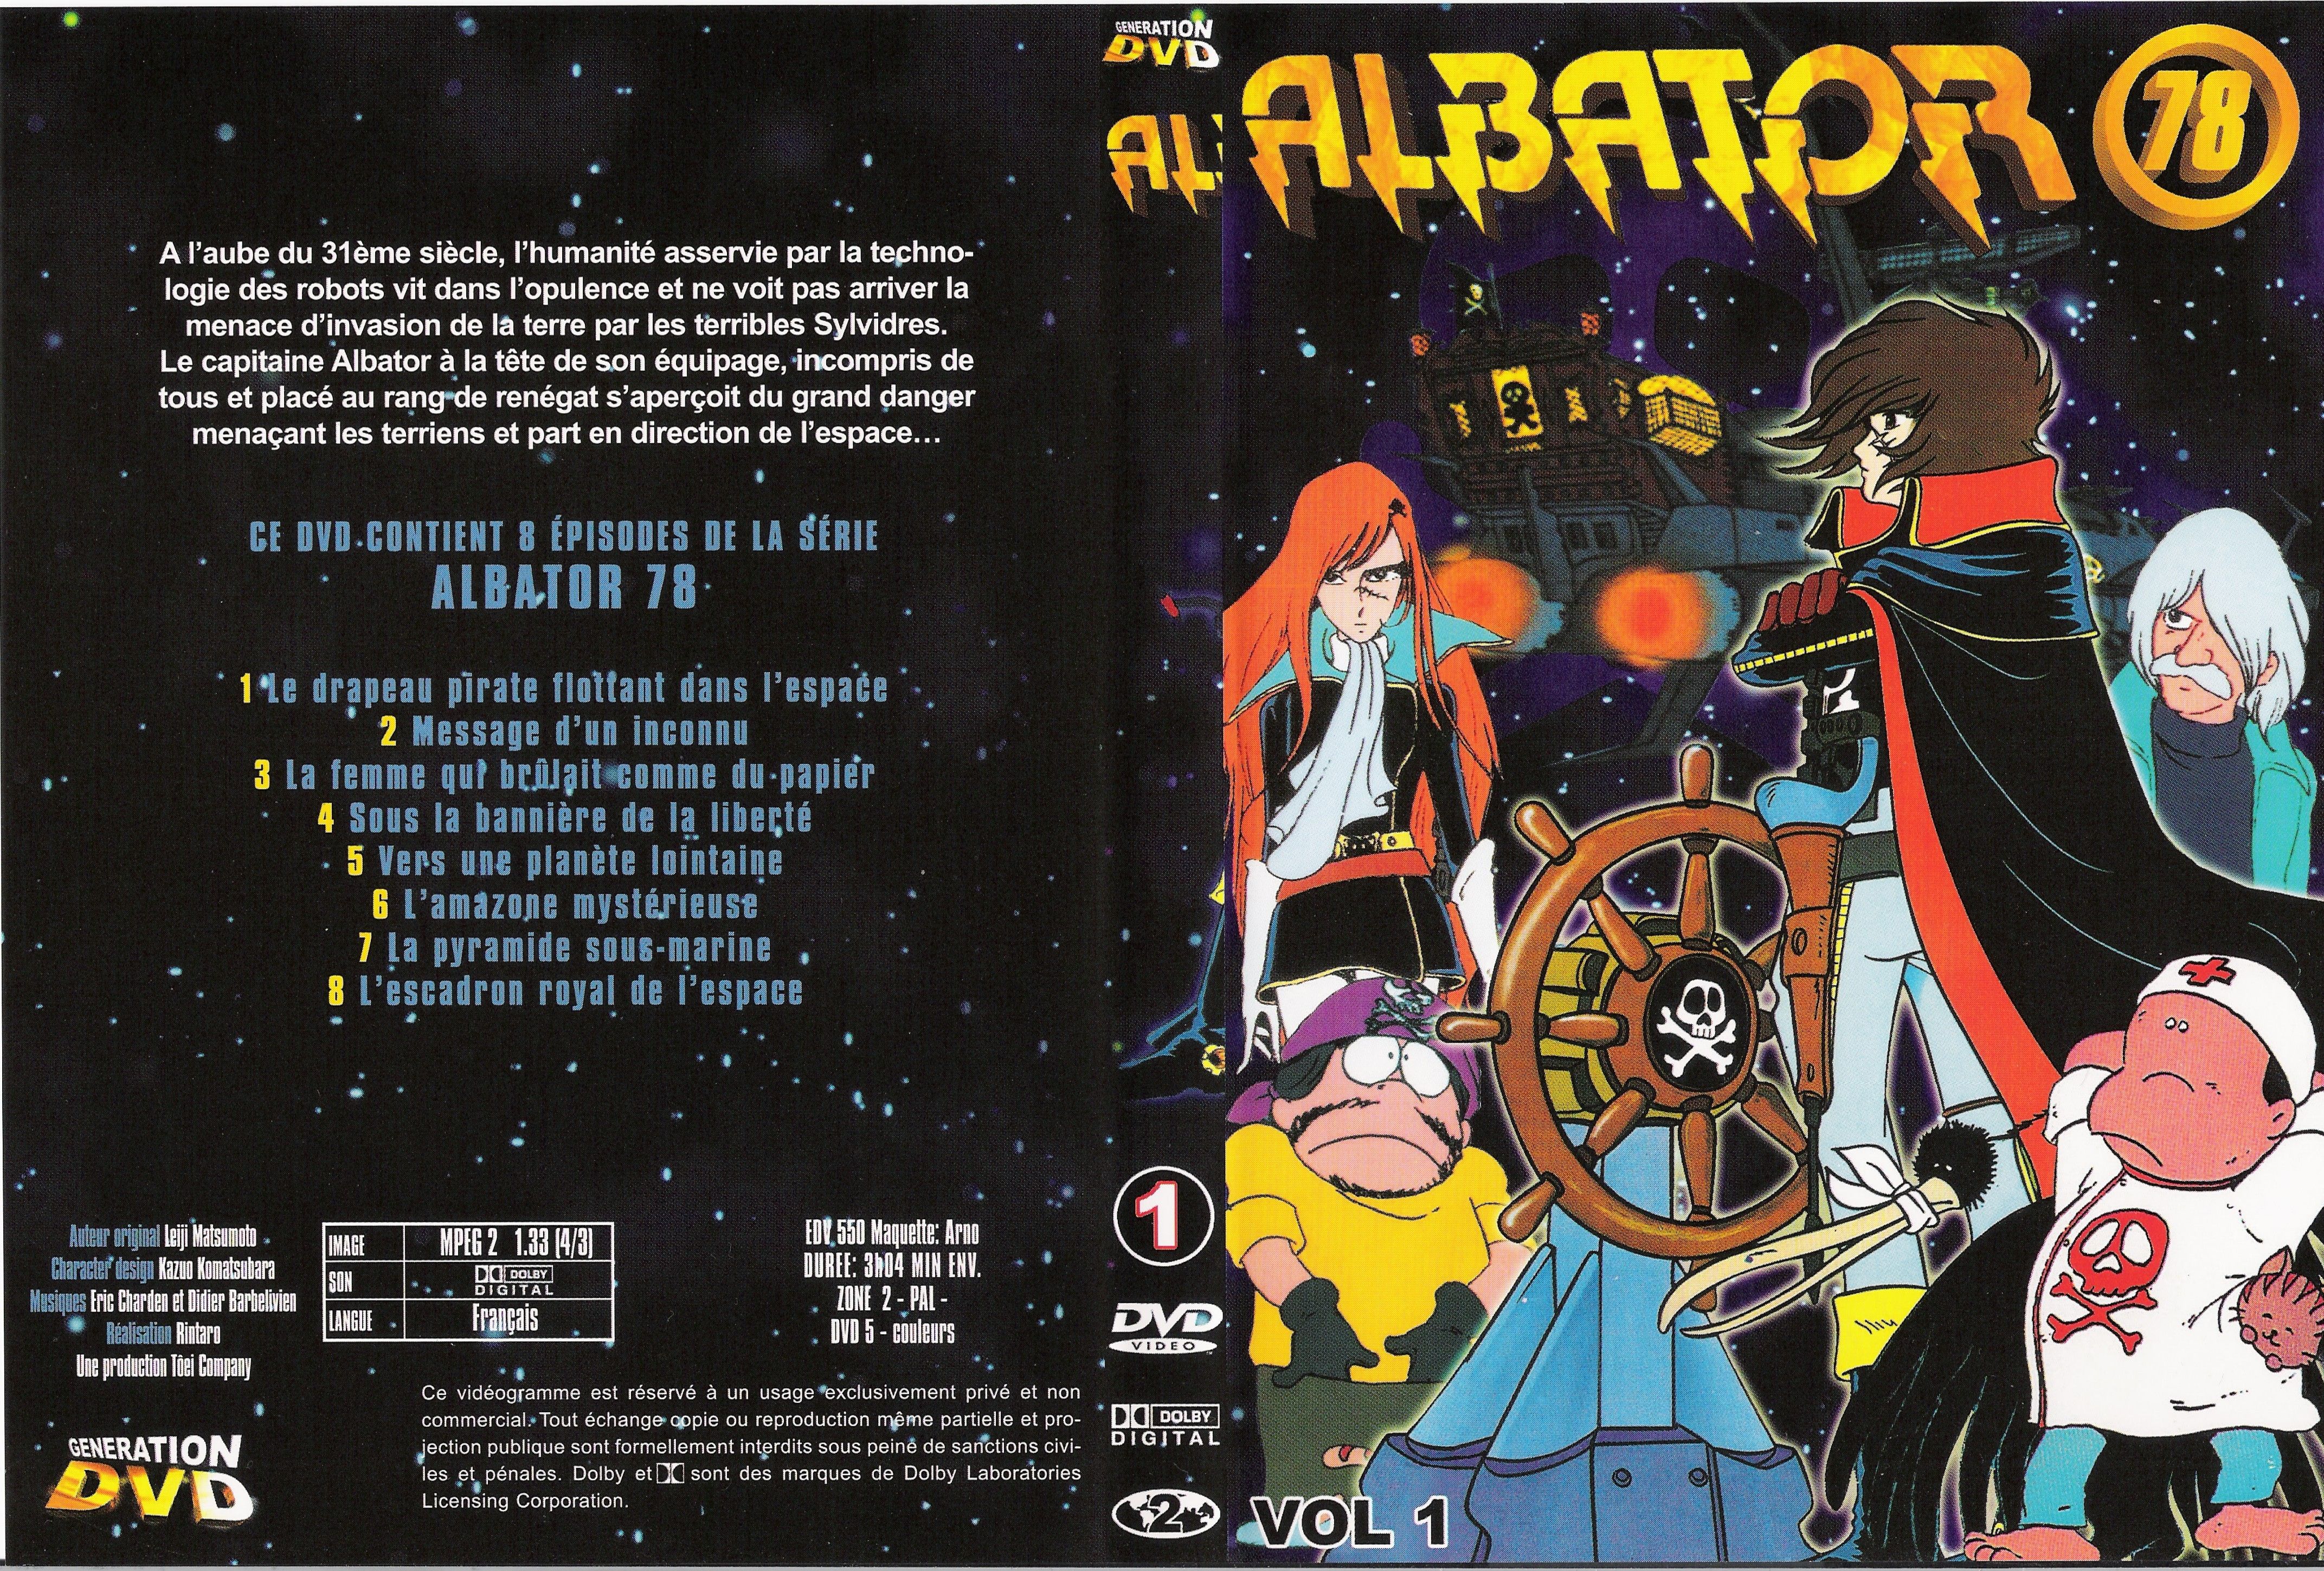 Jaquette DVD Albator 78 vol 1 (GENERATION DVD)